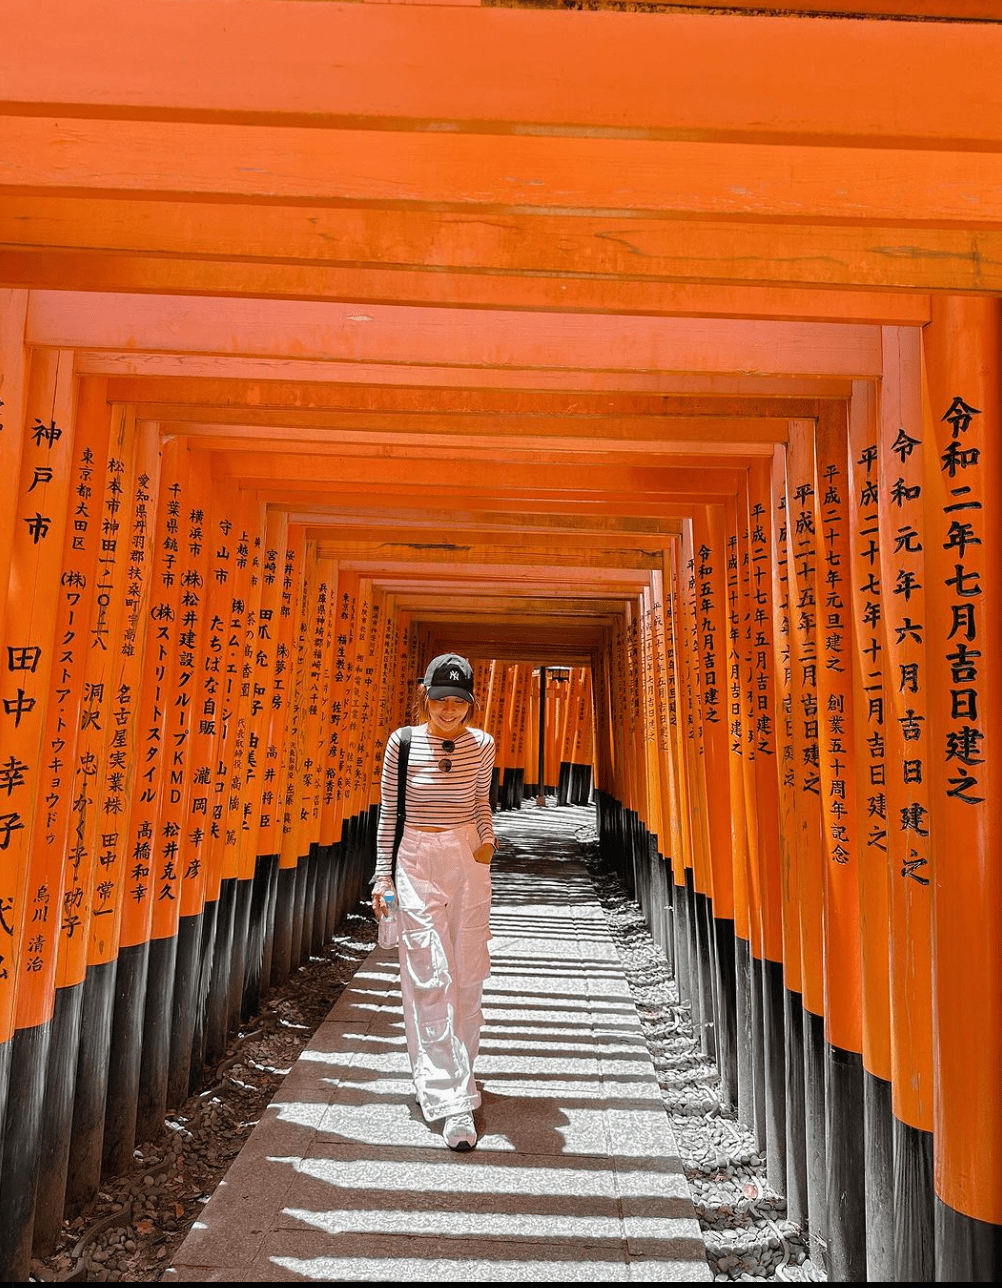 Cities In Japan - Kyoto Fushimi Inari Shrine